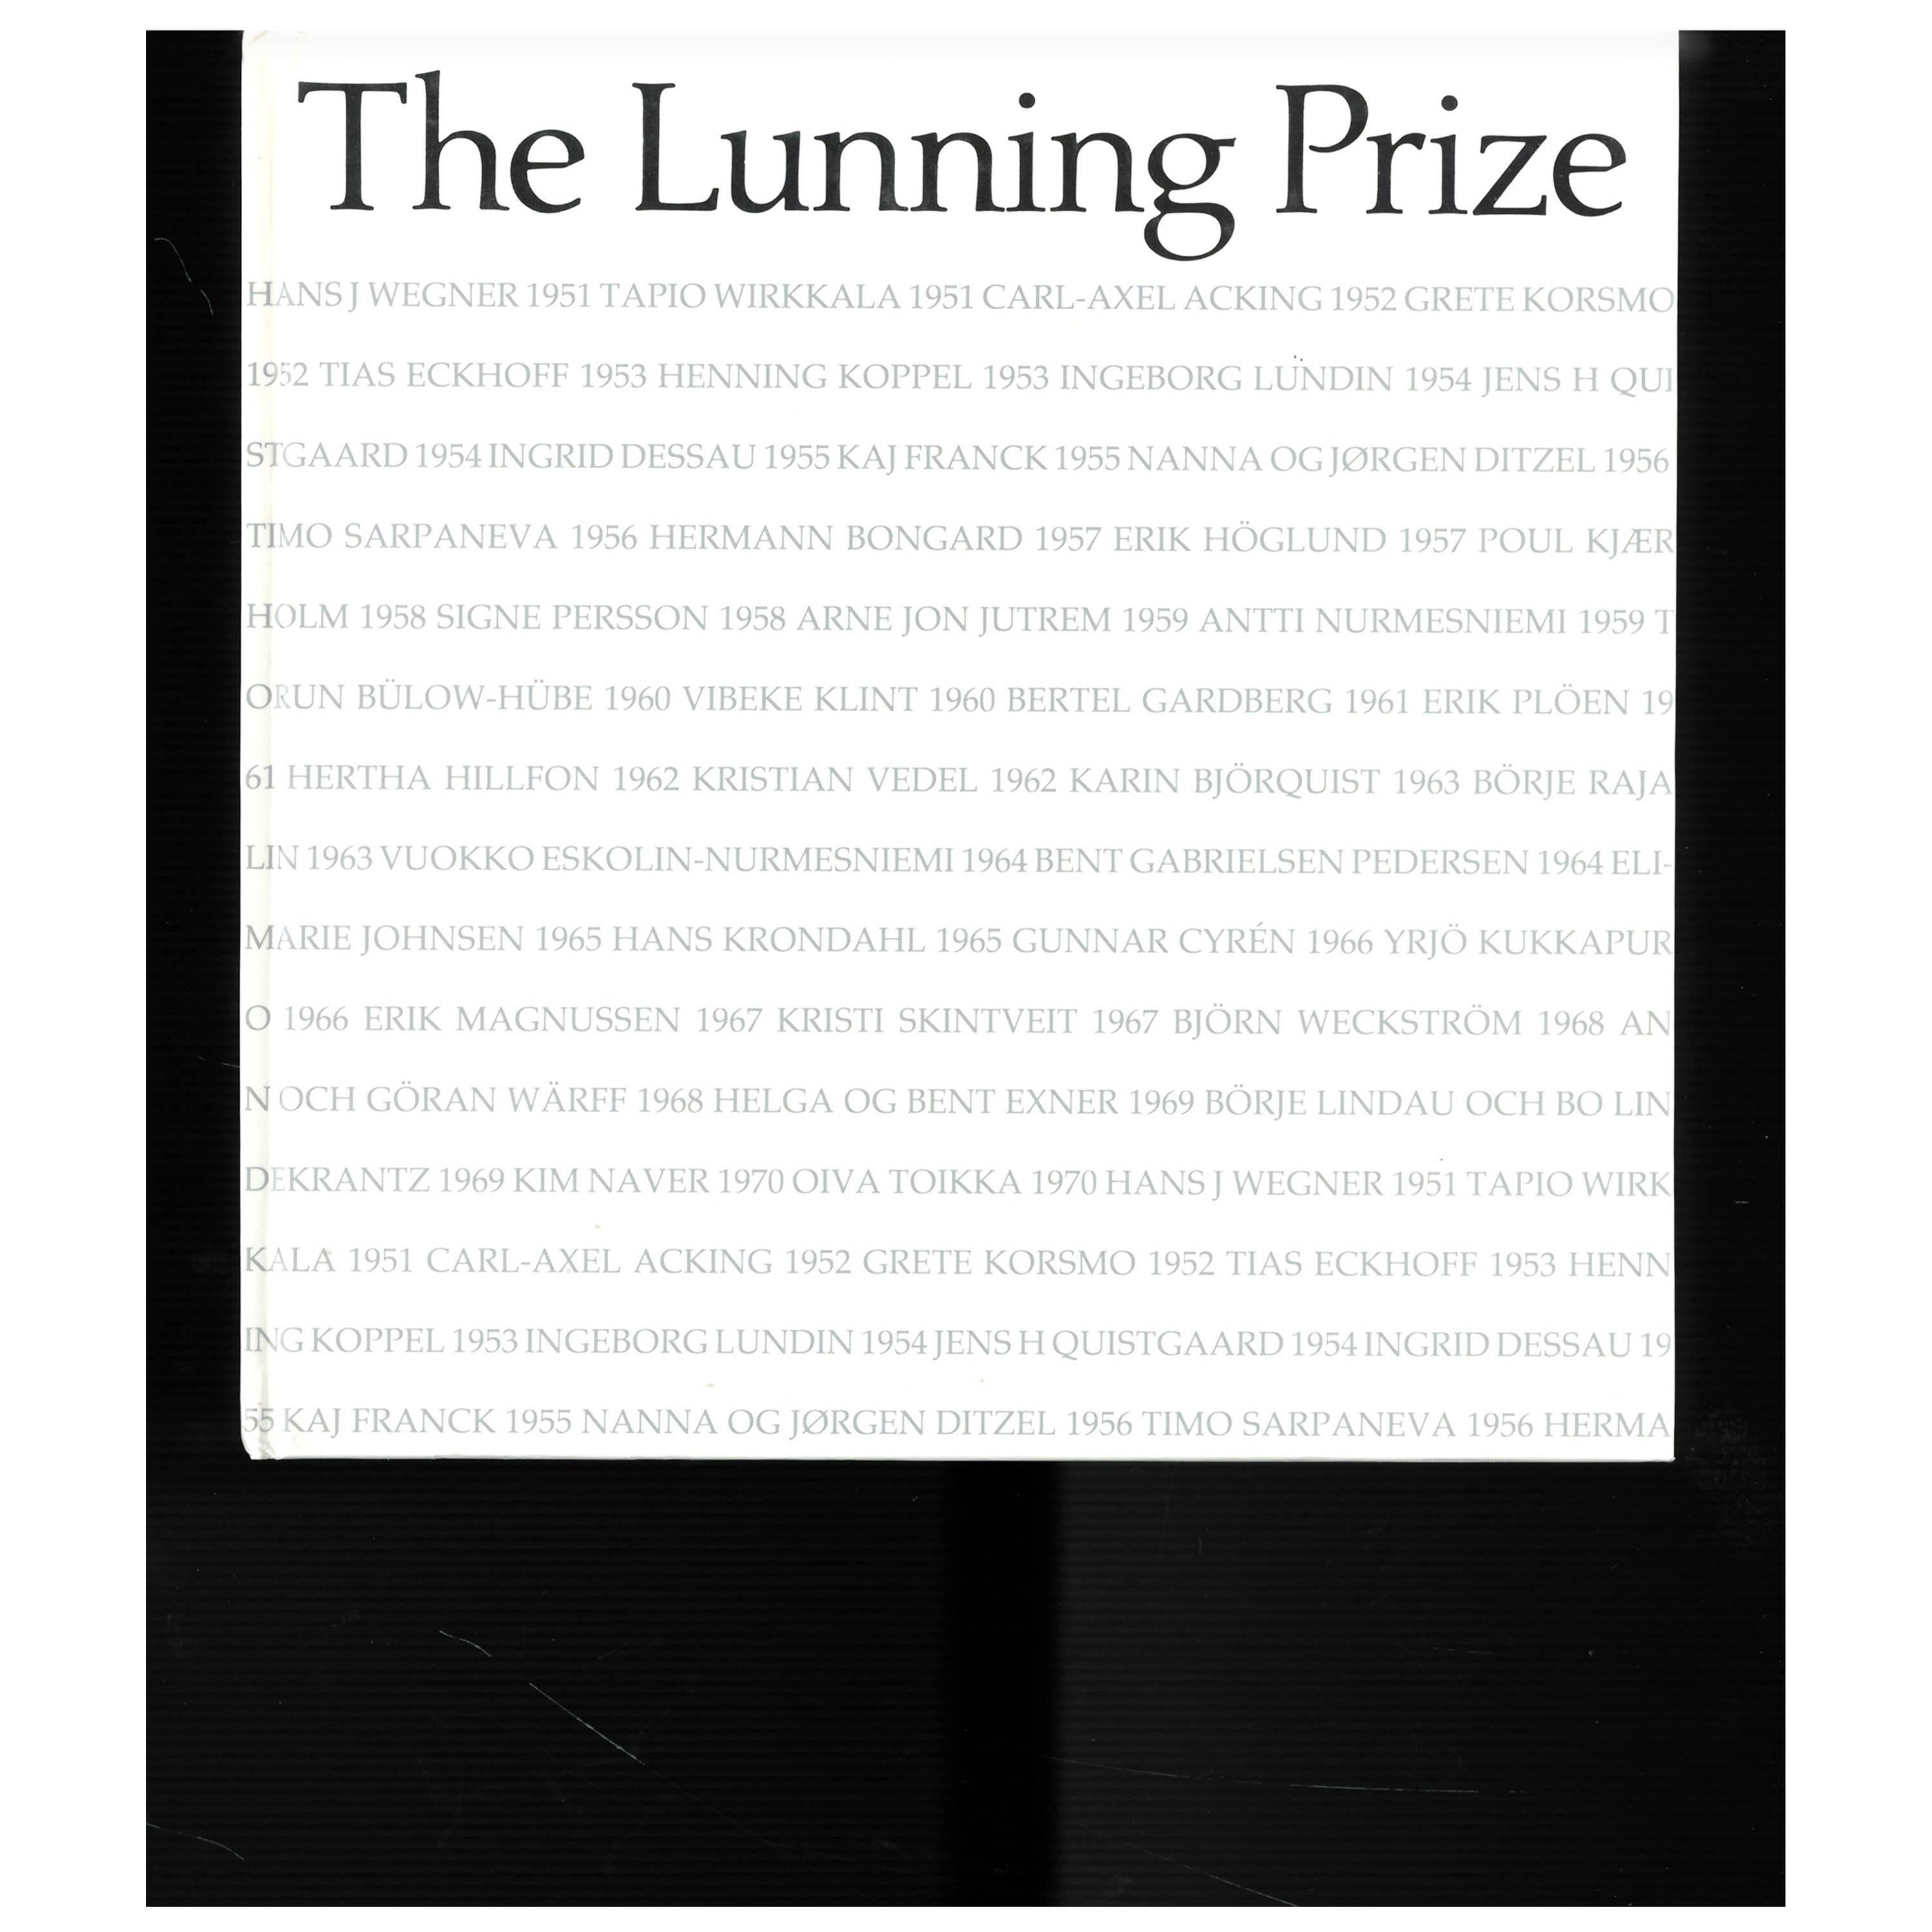 The Lunning Prize (Livre) en vente